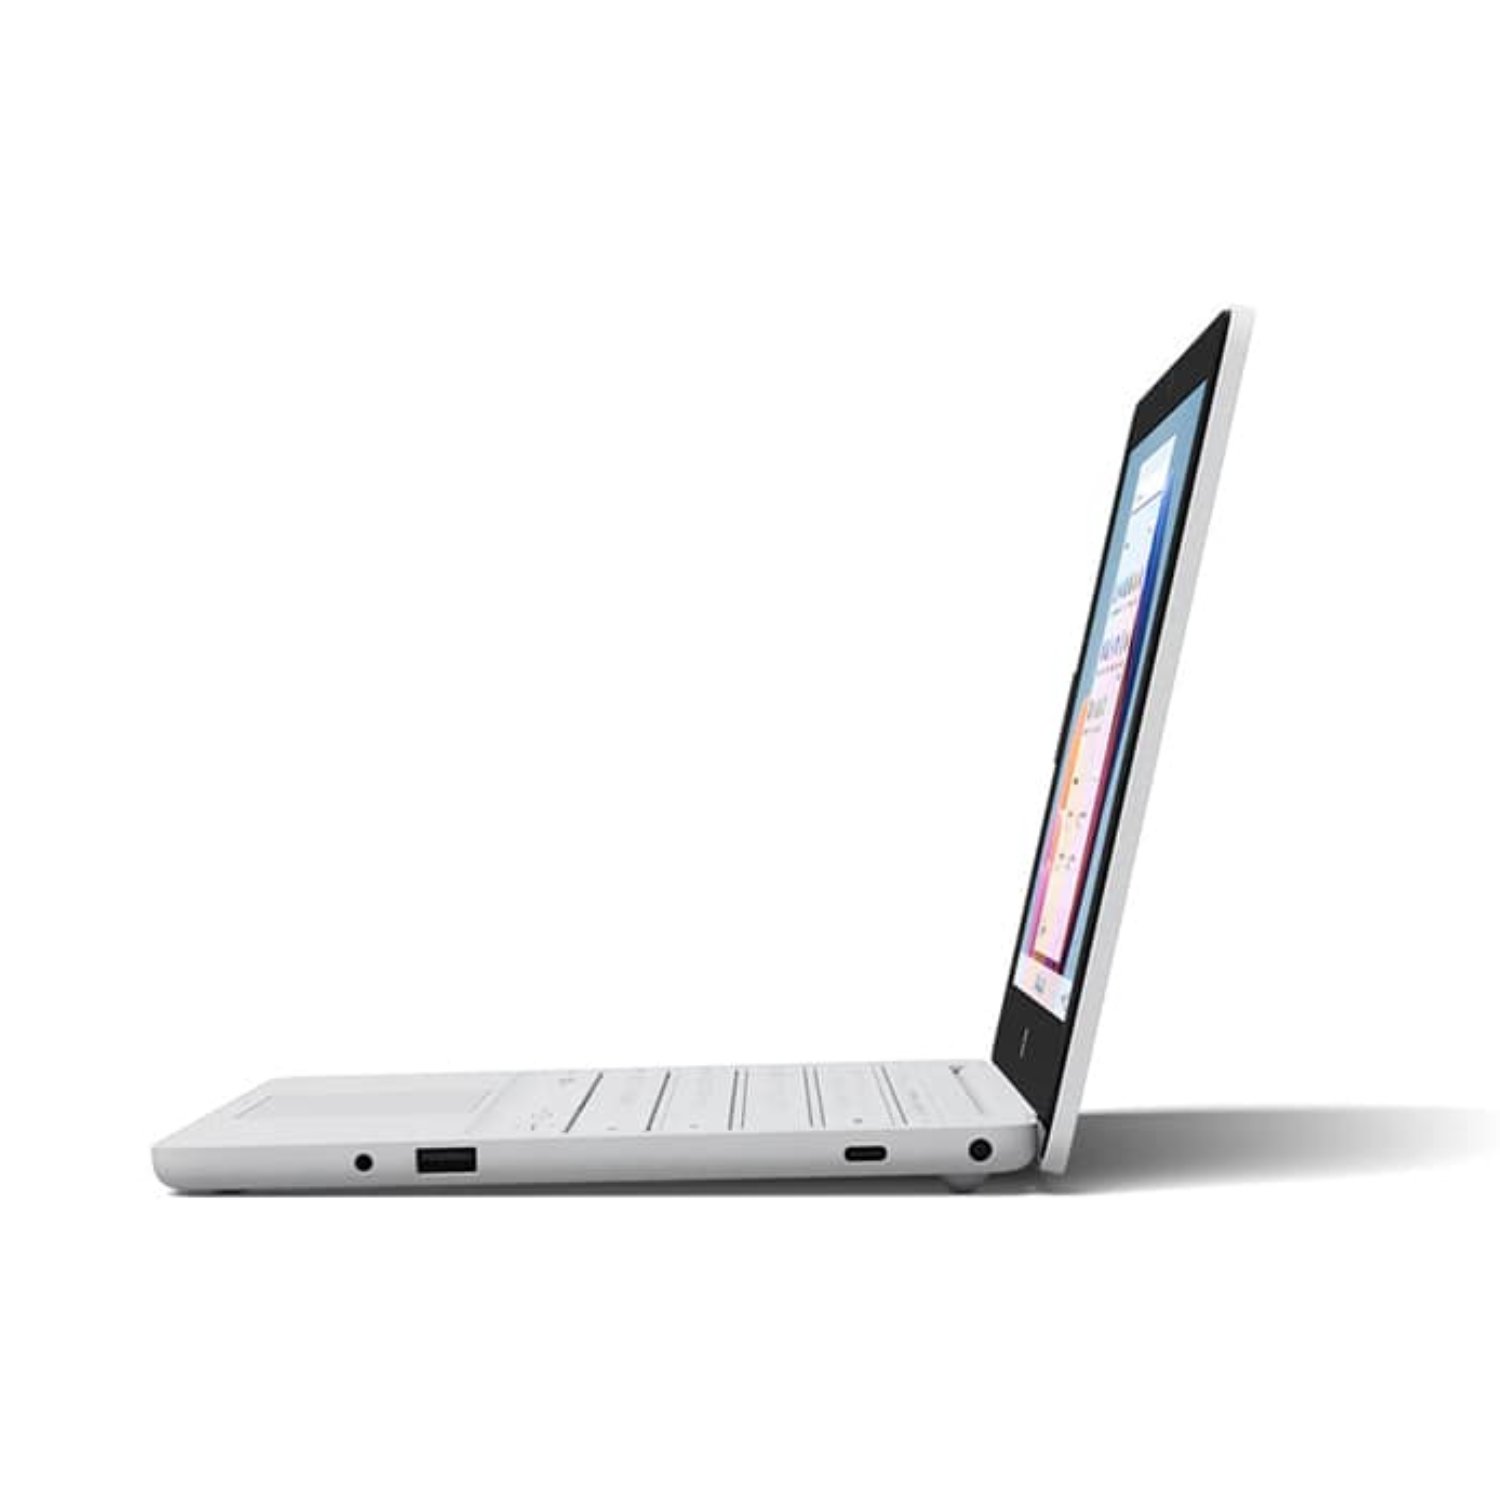 سرفیس لپ تاپ SE مایکروسافت 11 اینچ  Celeron N4120-8G-64G  